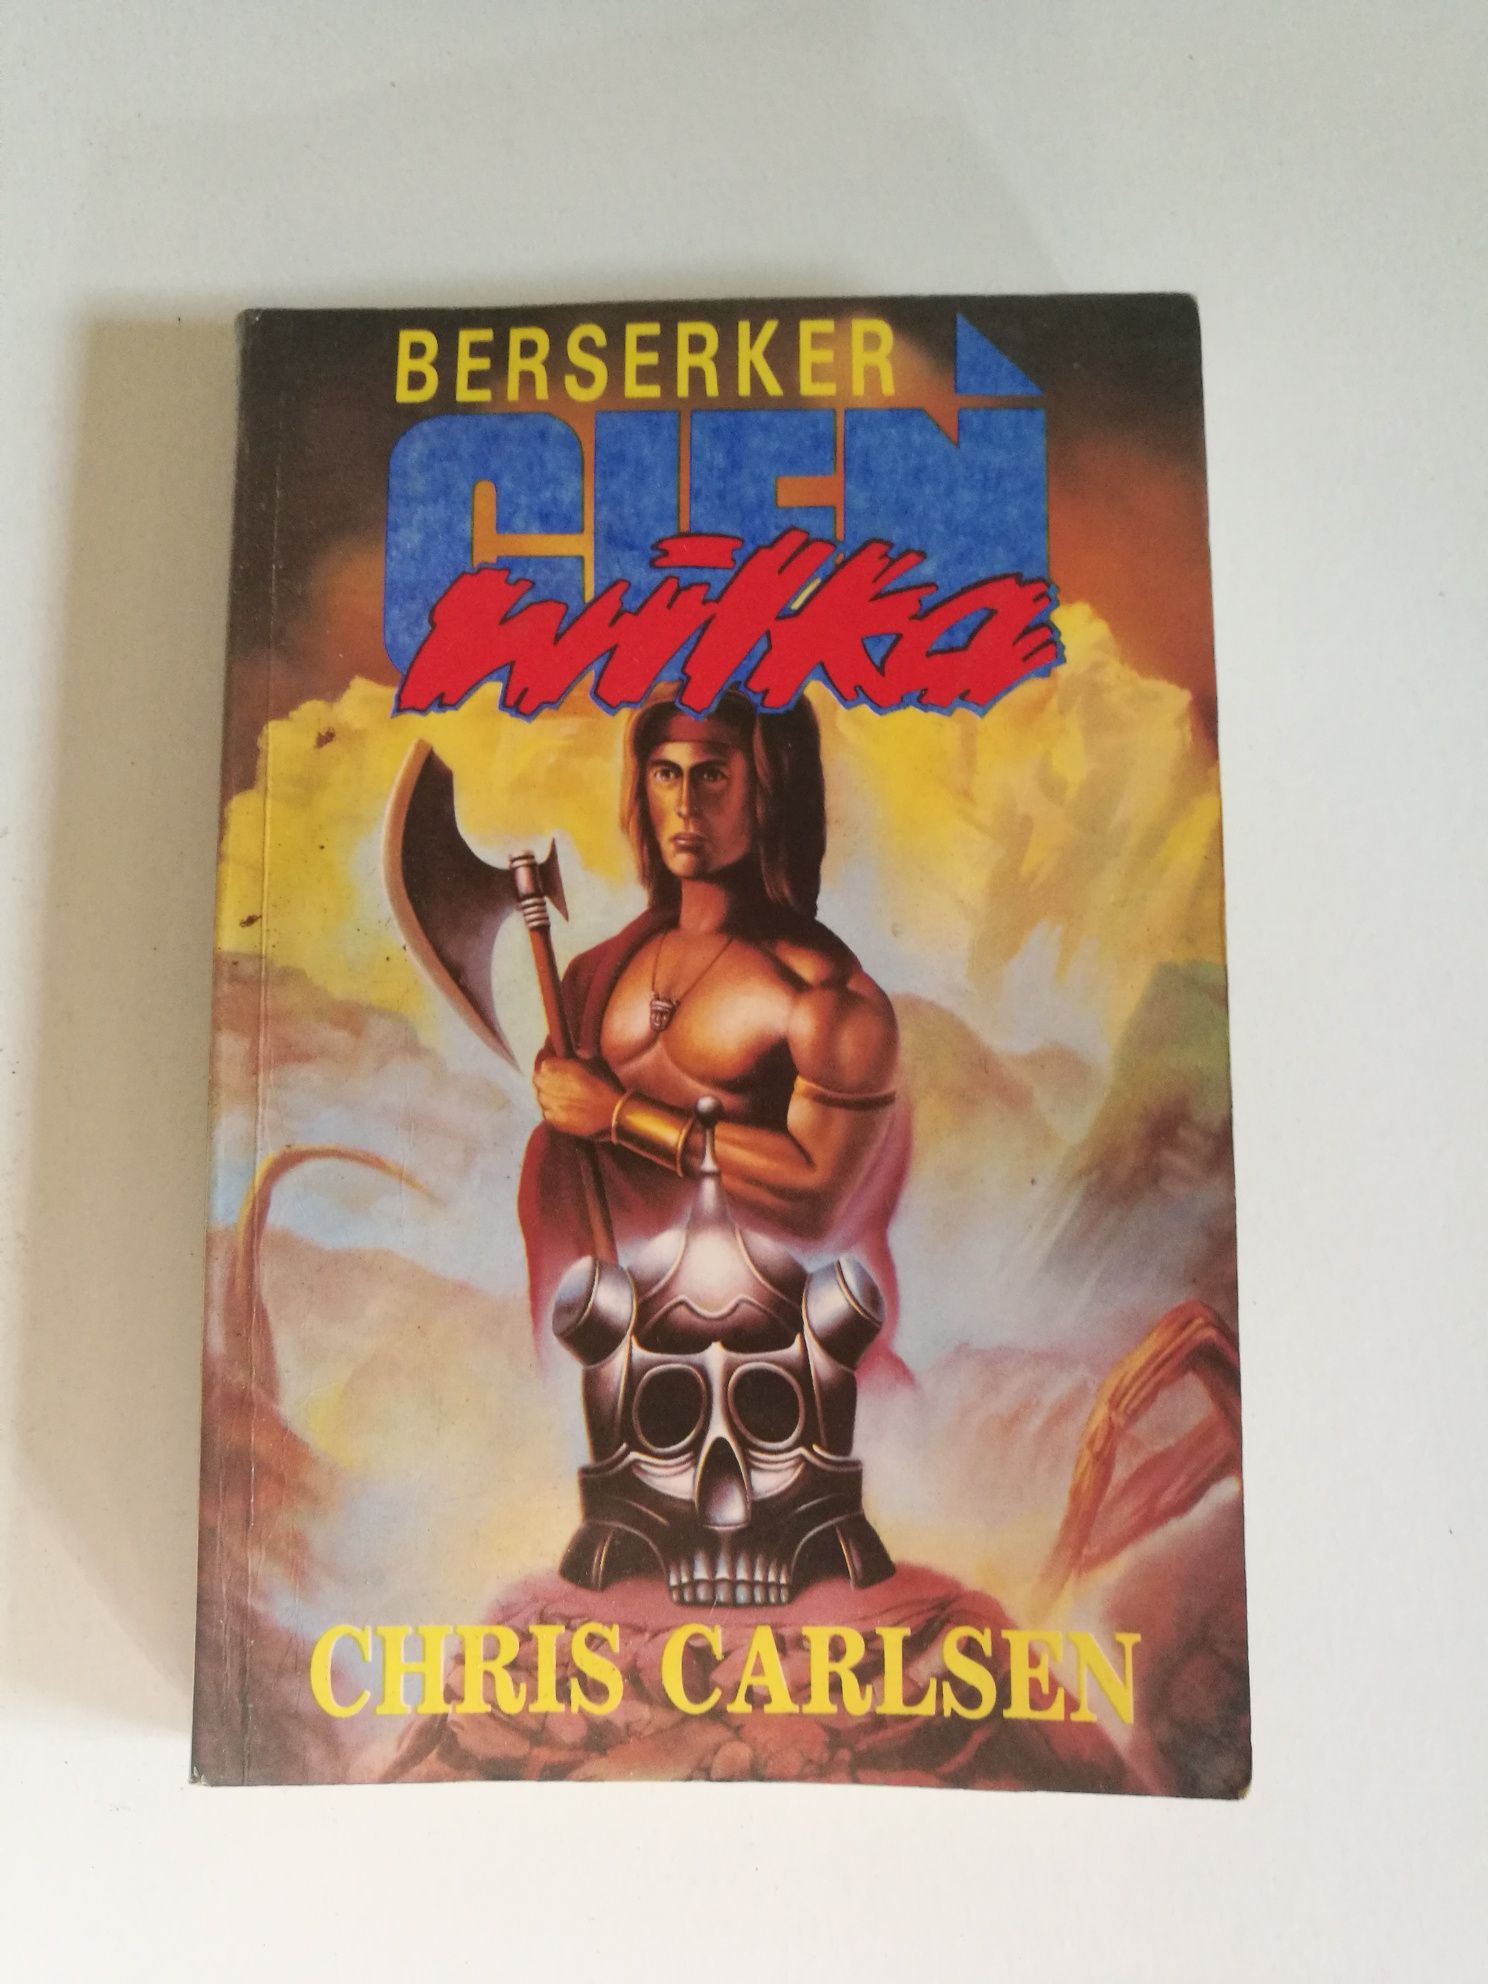 Książka "Berserker: cień wilka"